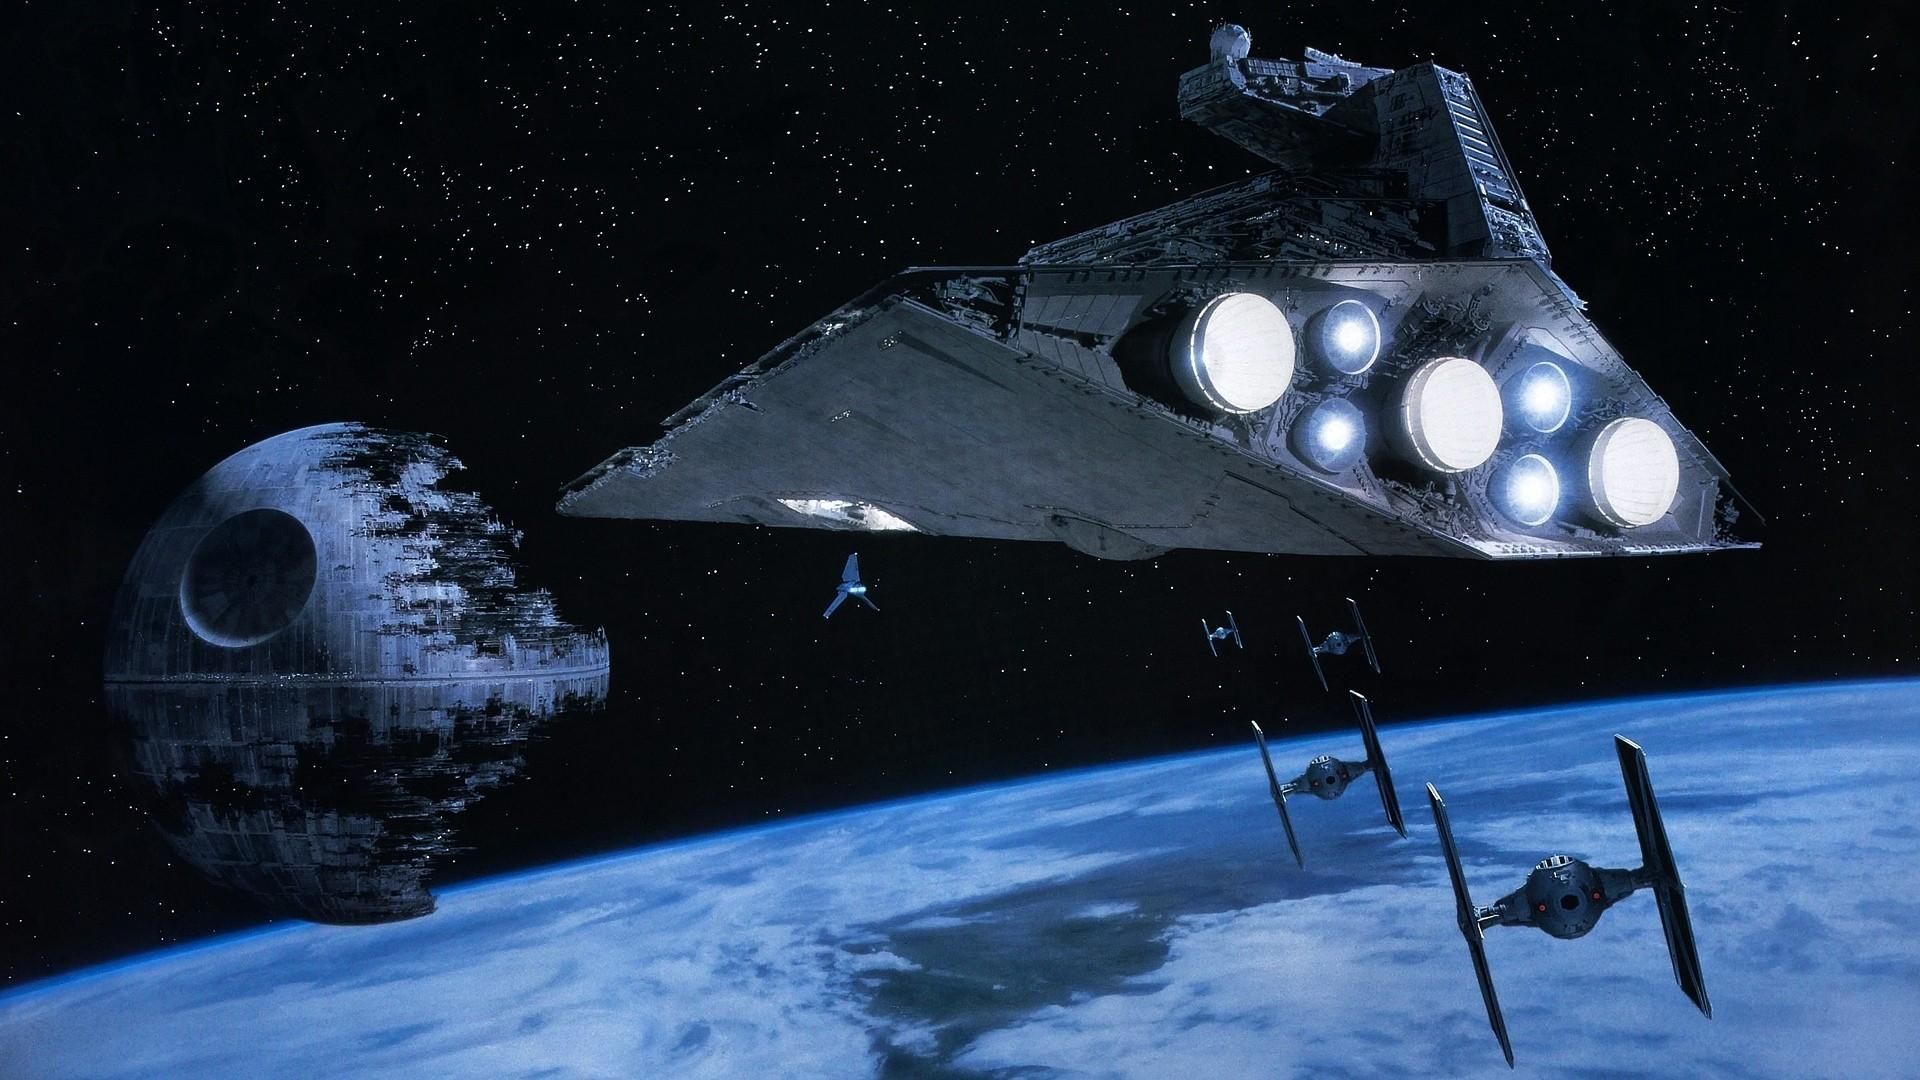 Star Wars: Episode VI - Return of the Jedi background